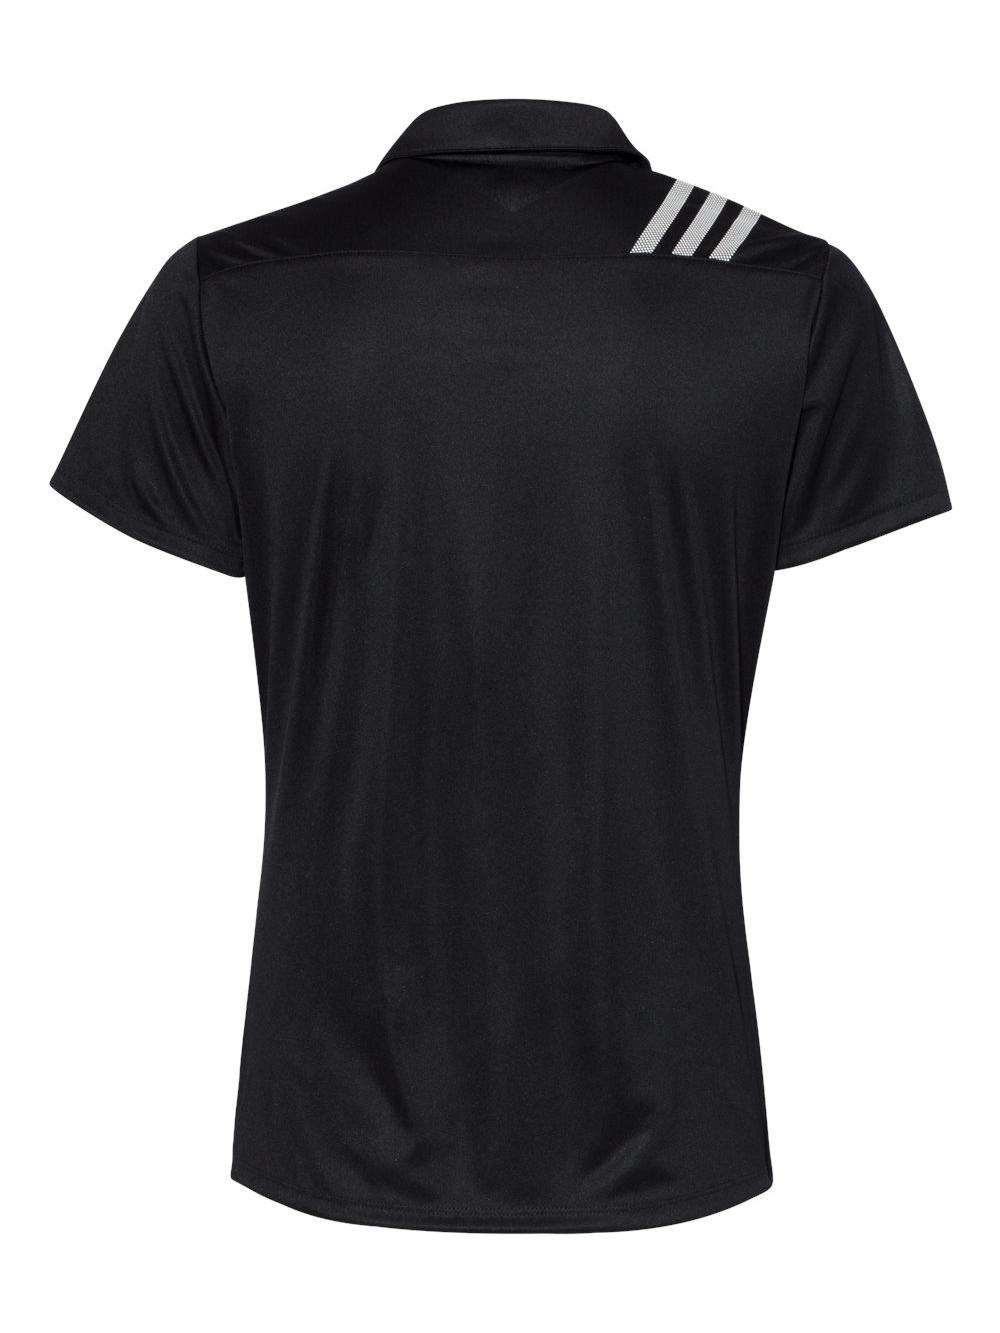 Adidas - Women's 3-Stripes Shoulder Polo - A325 - Black/ White - Size: 3XL - image 3 of 3